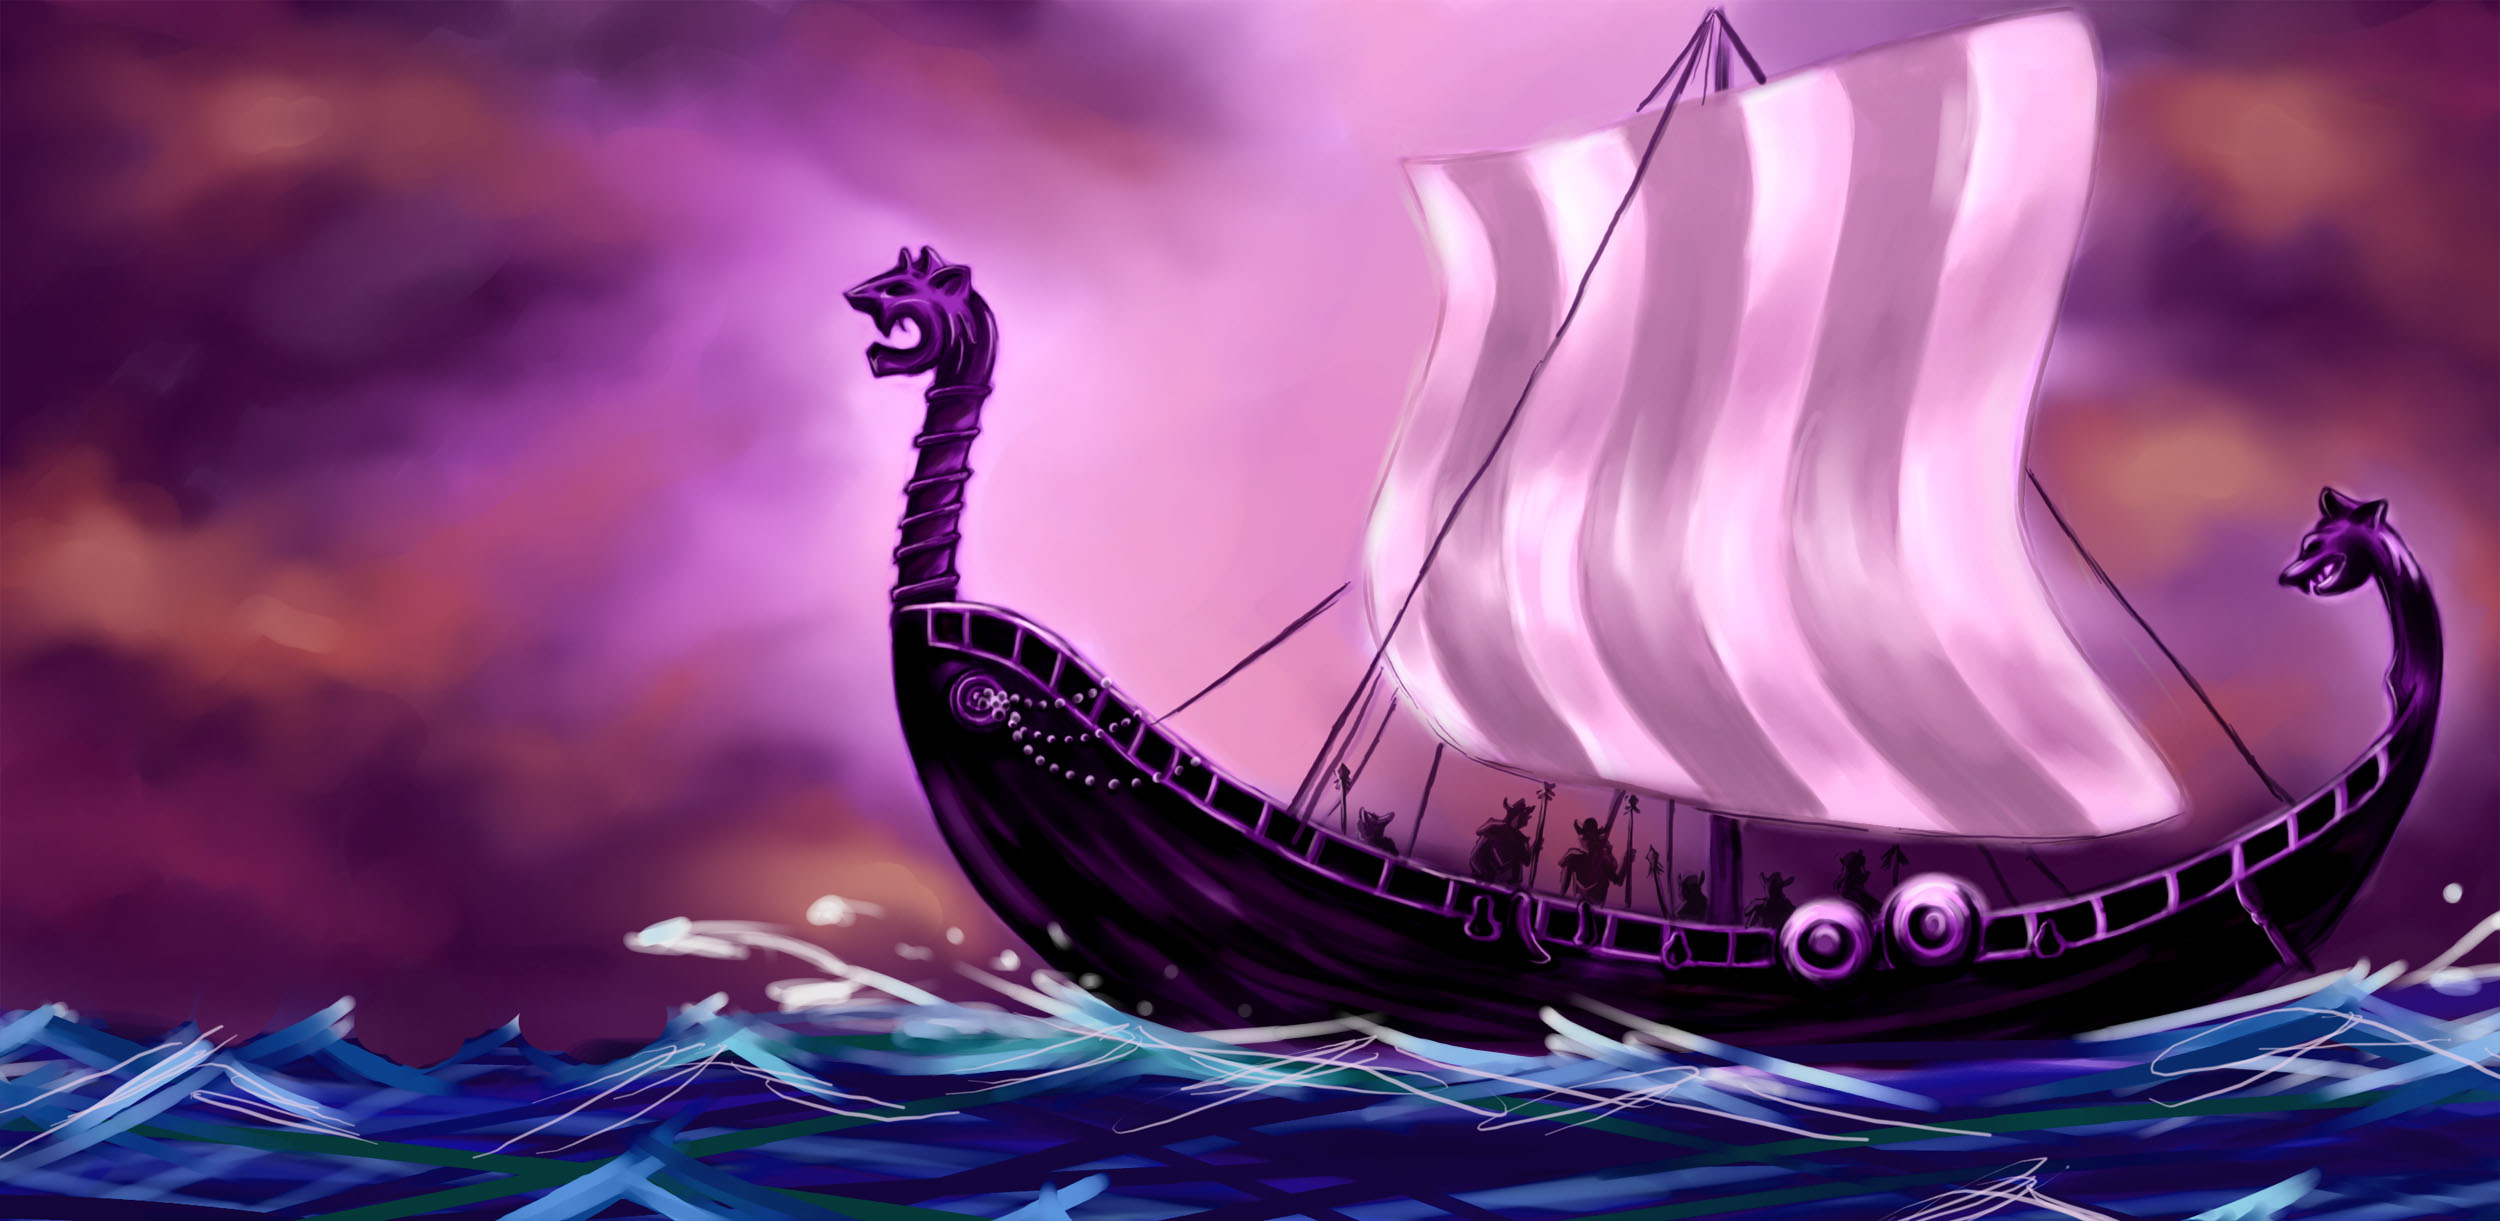 HD desktop wallpaper: Fantasy, Ship, Viking download free picture #245969